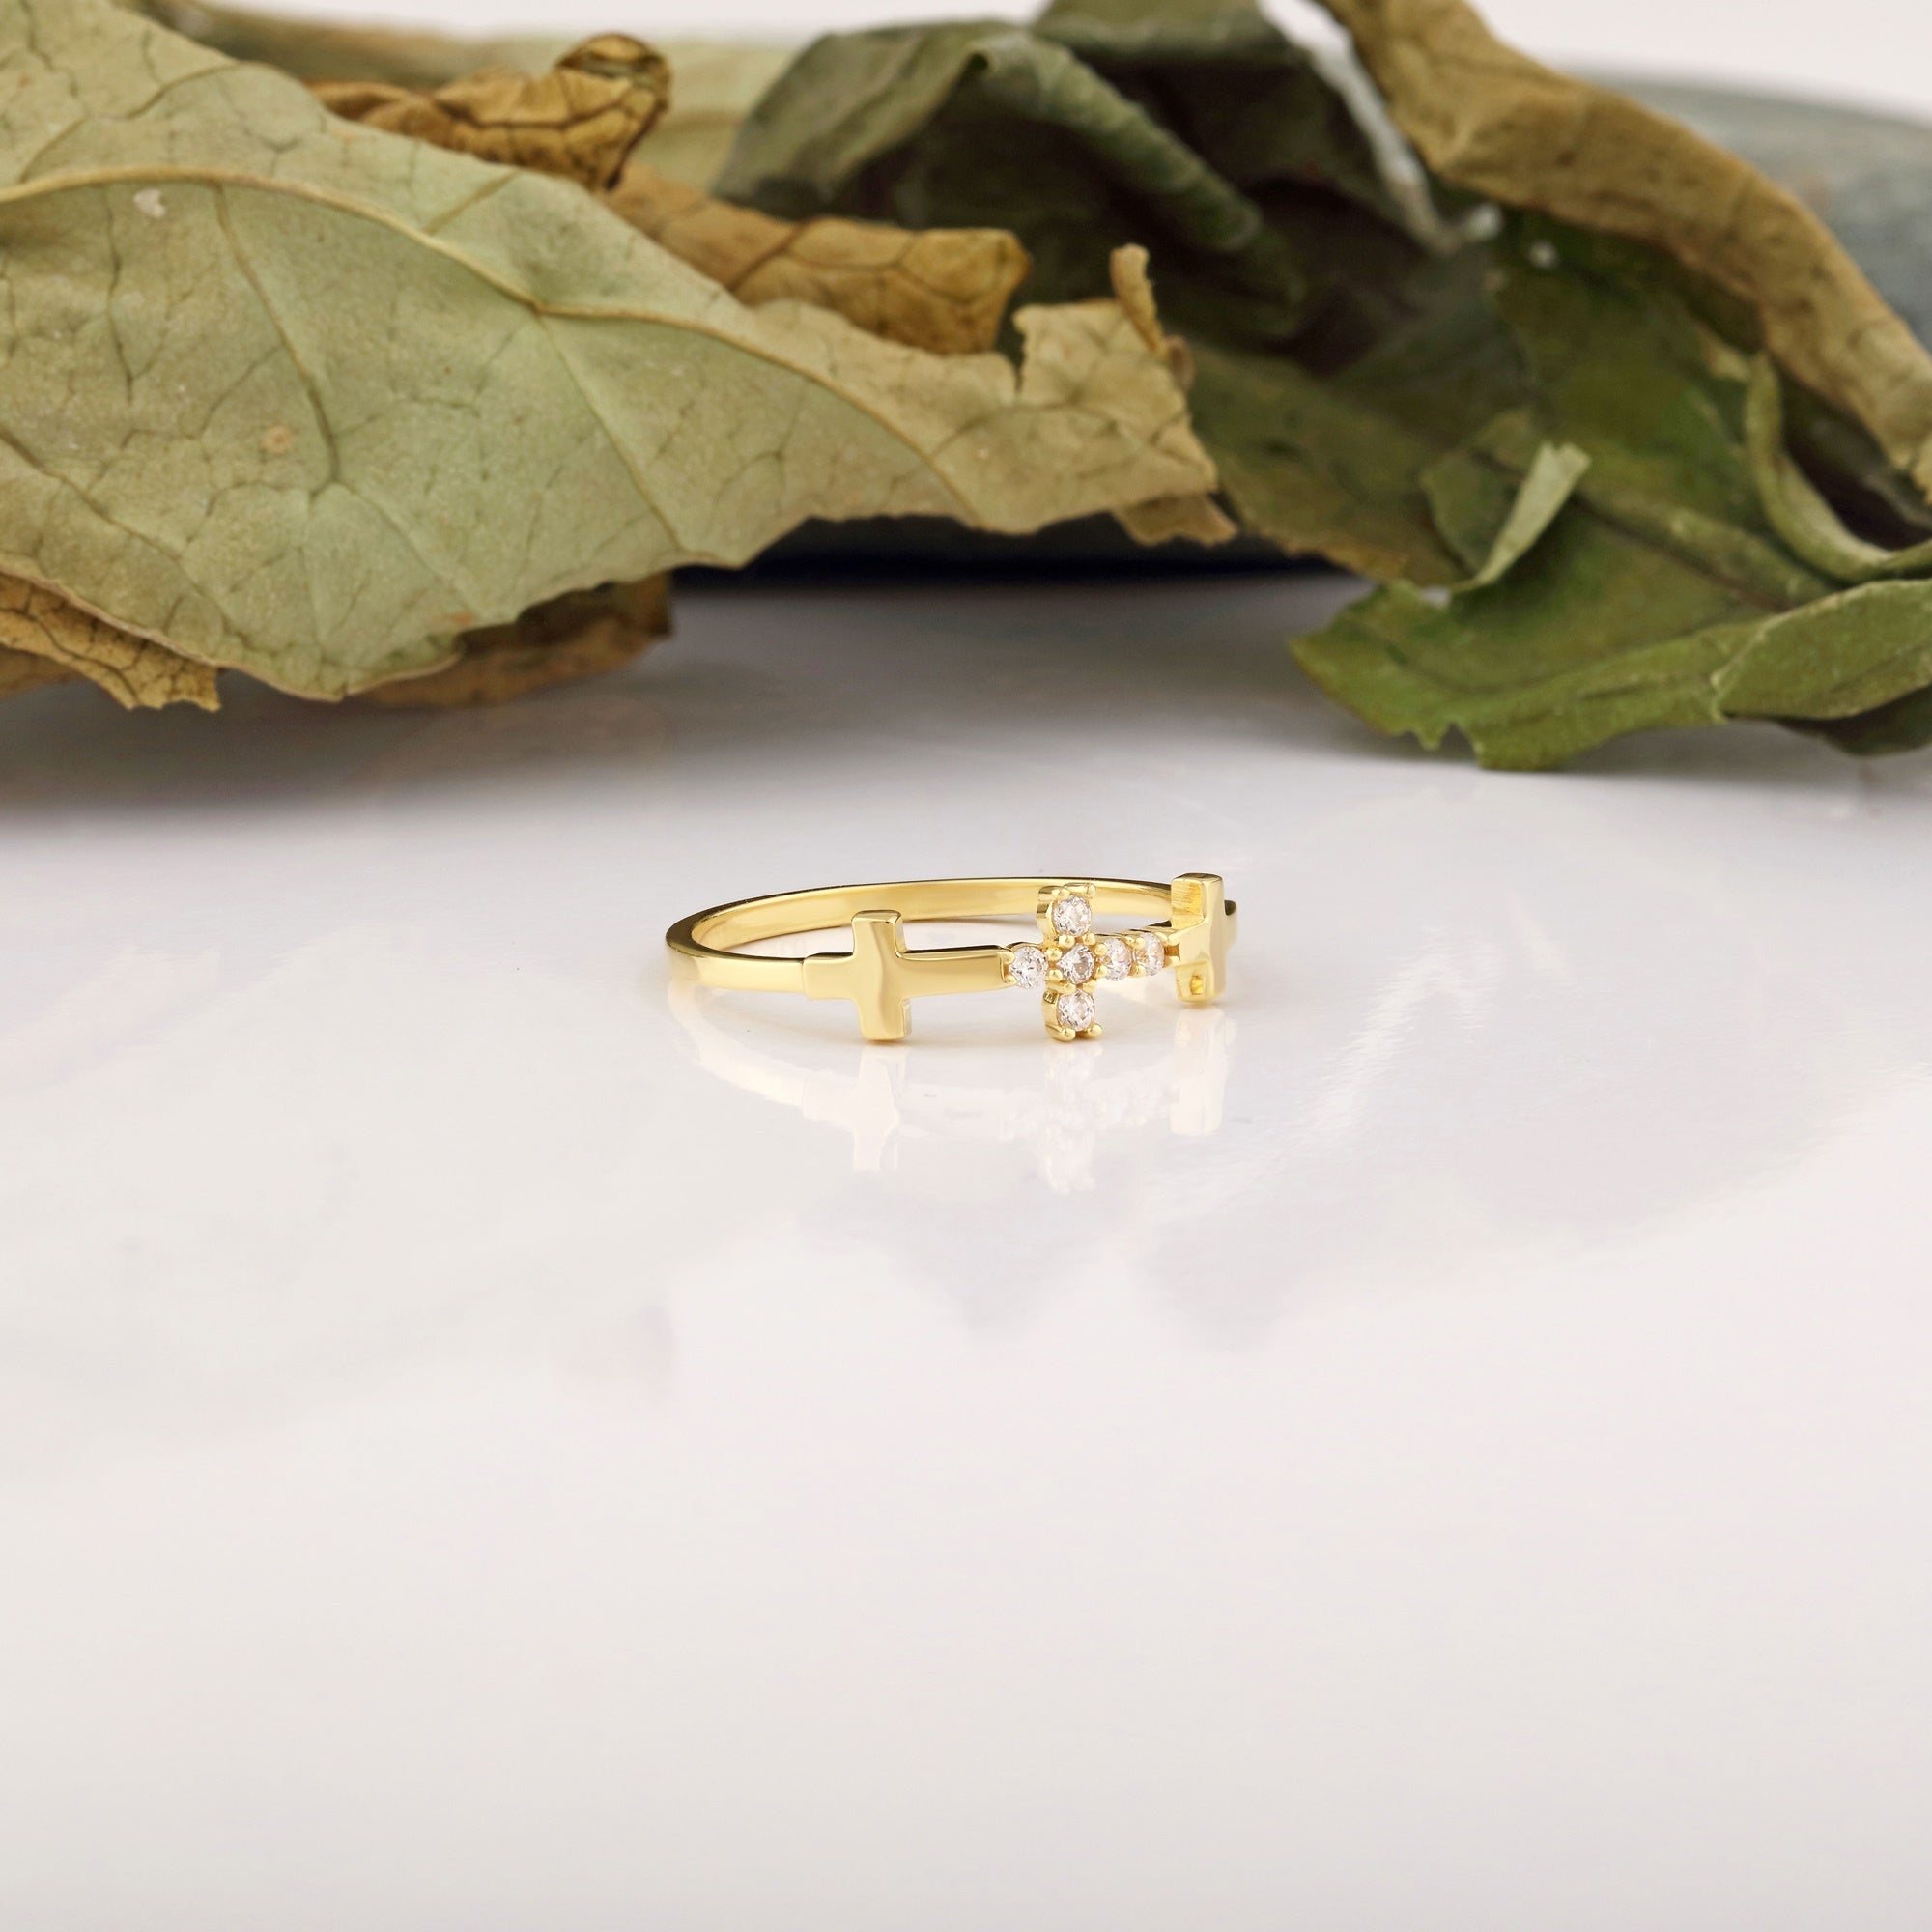 Gold Diamond Cross Ring, Dainty Cross Ring Gift, Zircon Multi Stone Cross Ring